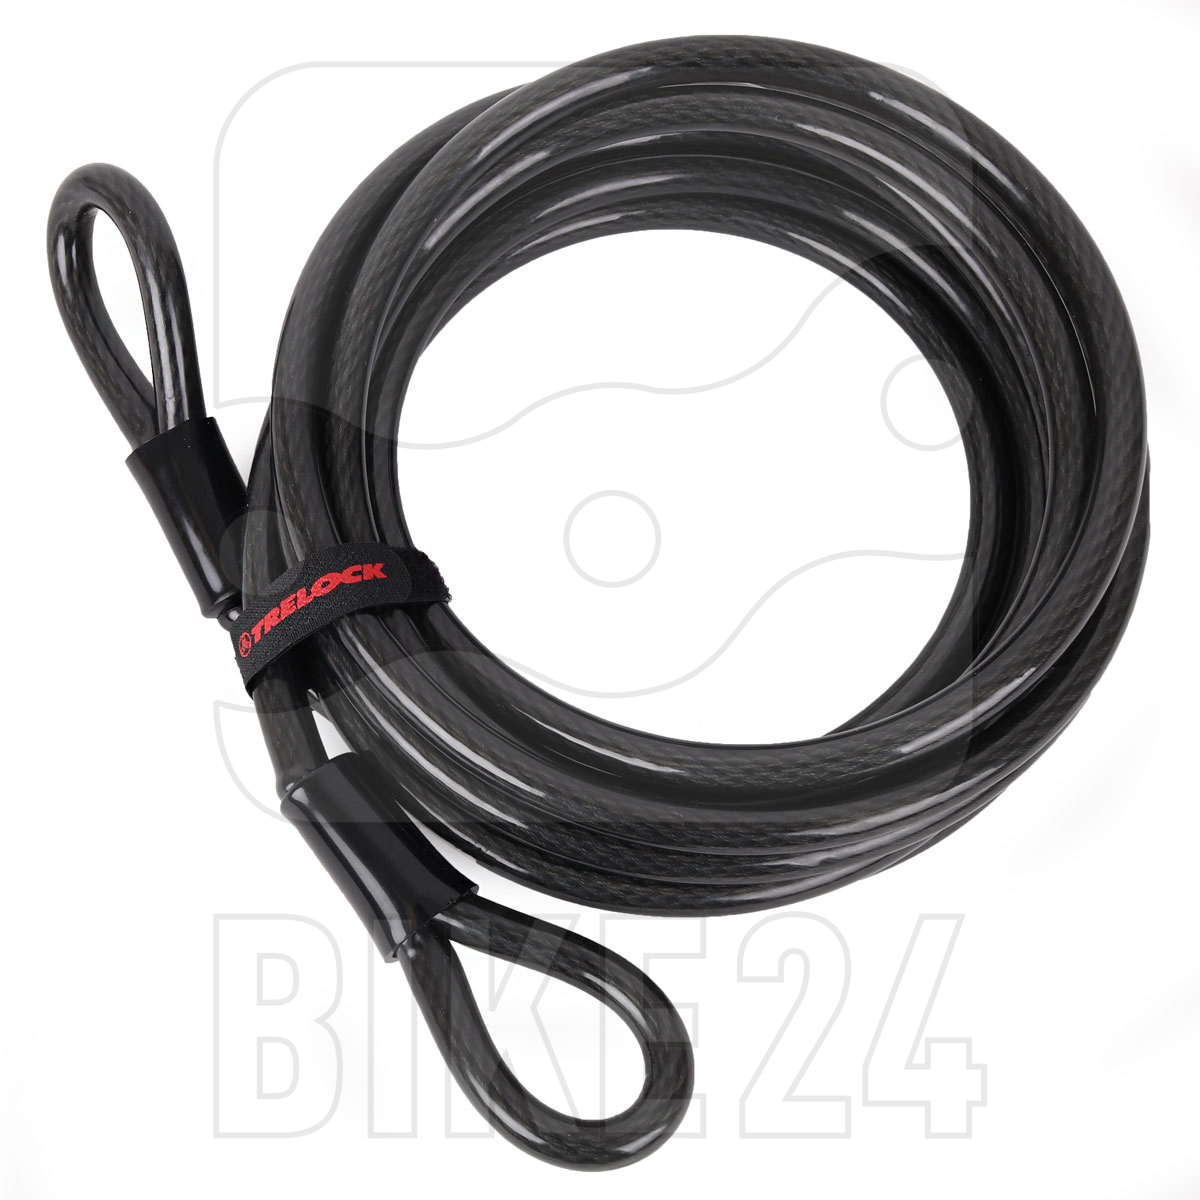 Productfoto van Trelock ZS 500/12 Loop Cable